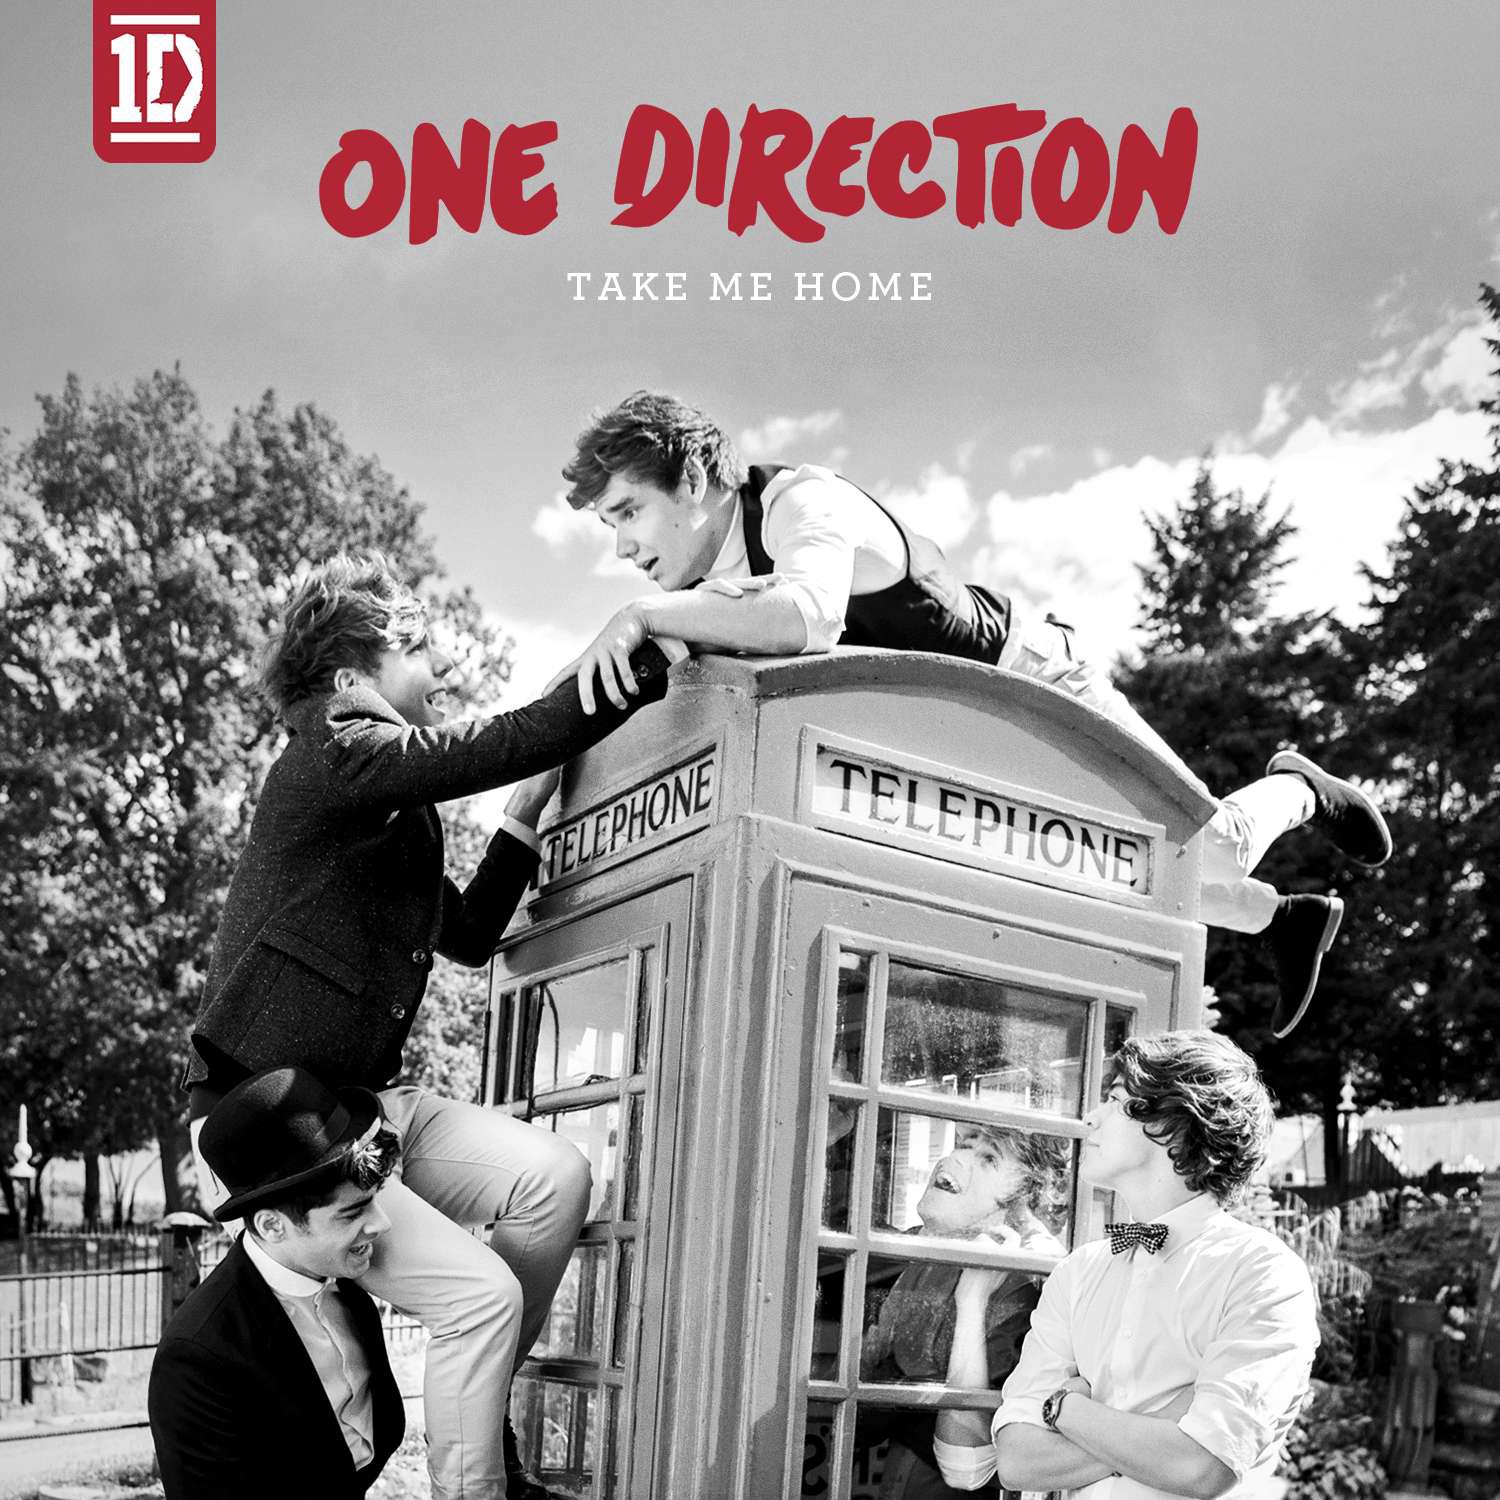 Скачать One Direction Take Me Home mp3 бесплатно.